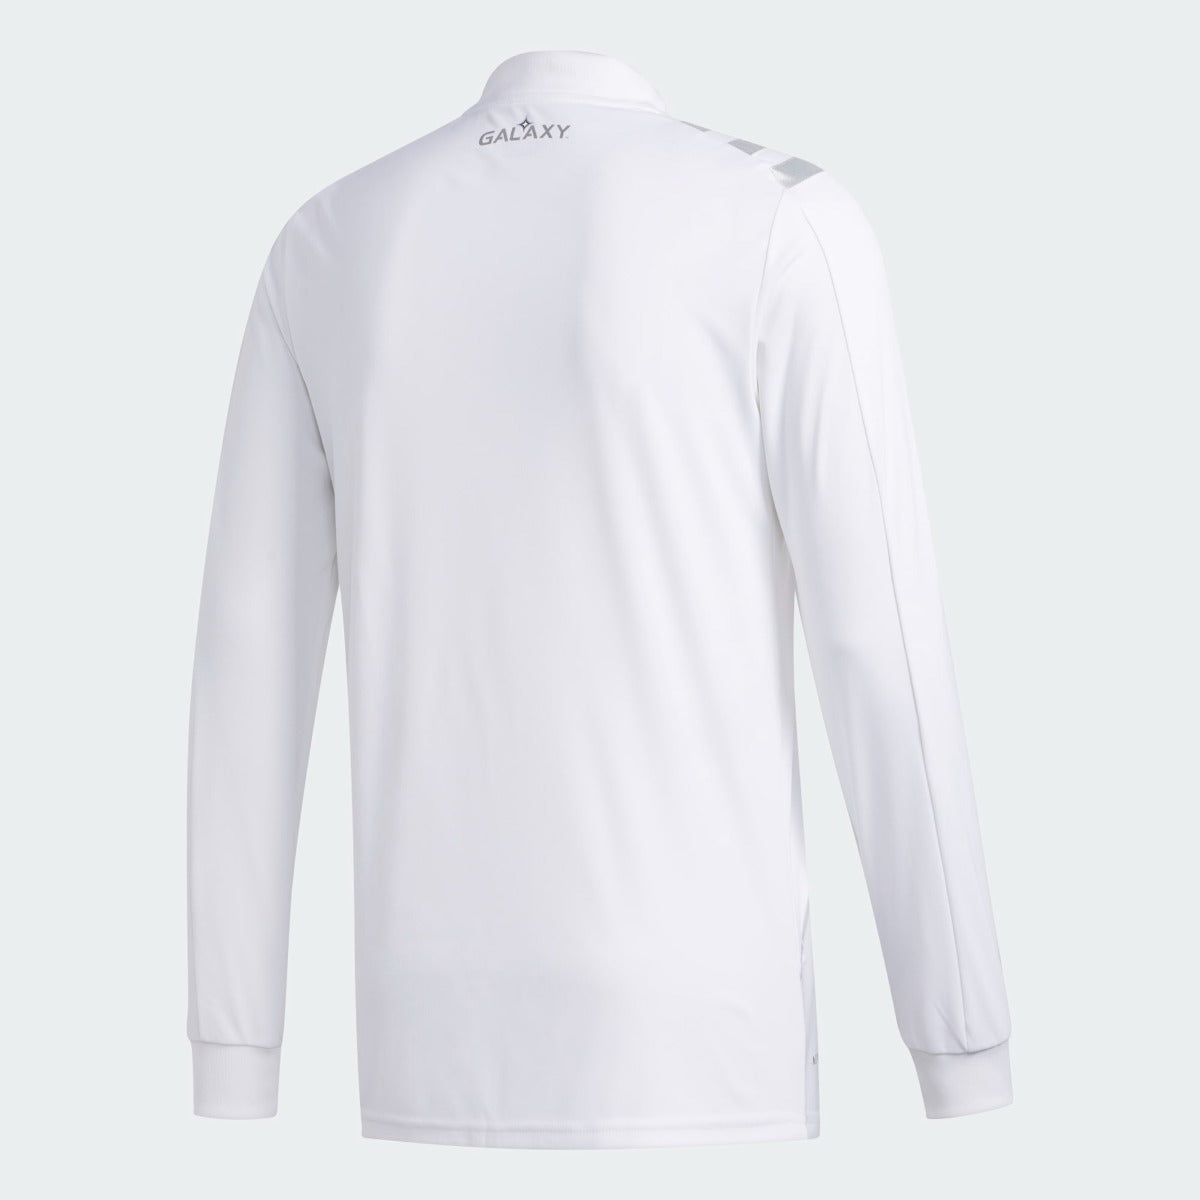 Adidas 2021 LA Galaxy Home Long-Sleeve Jersey - White-Grey